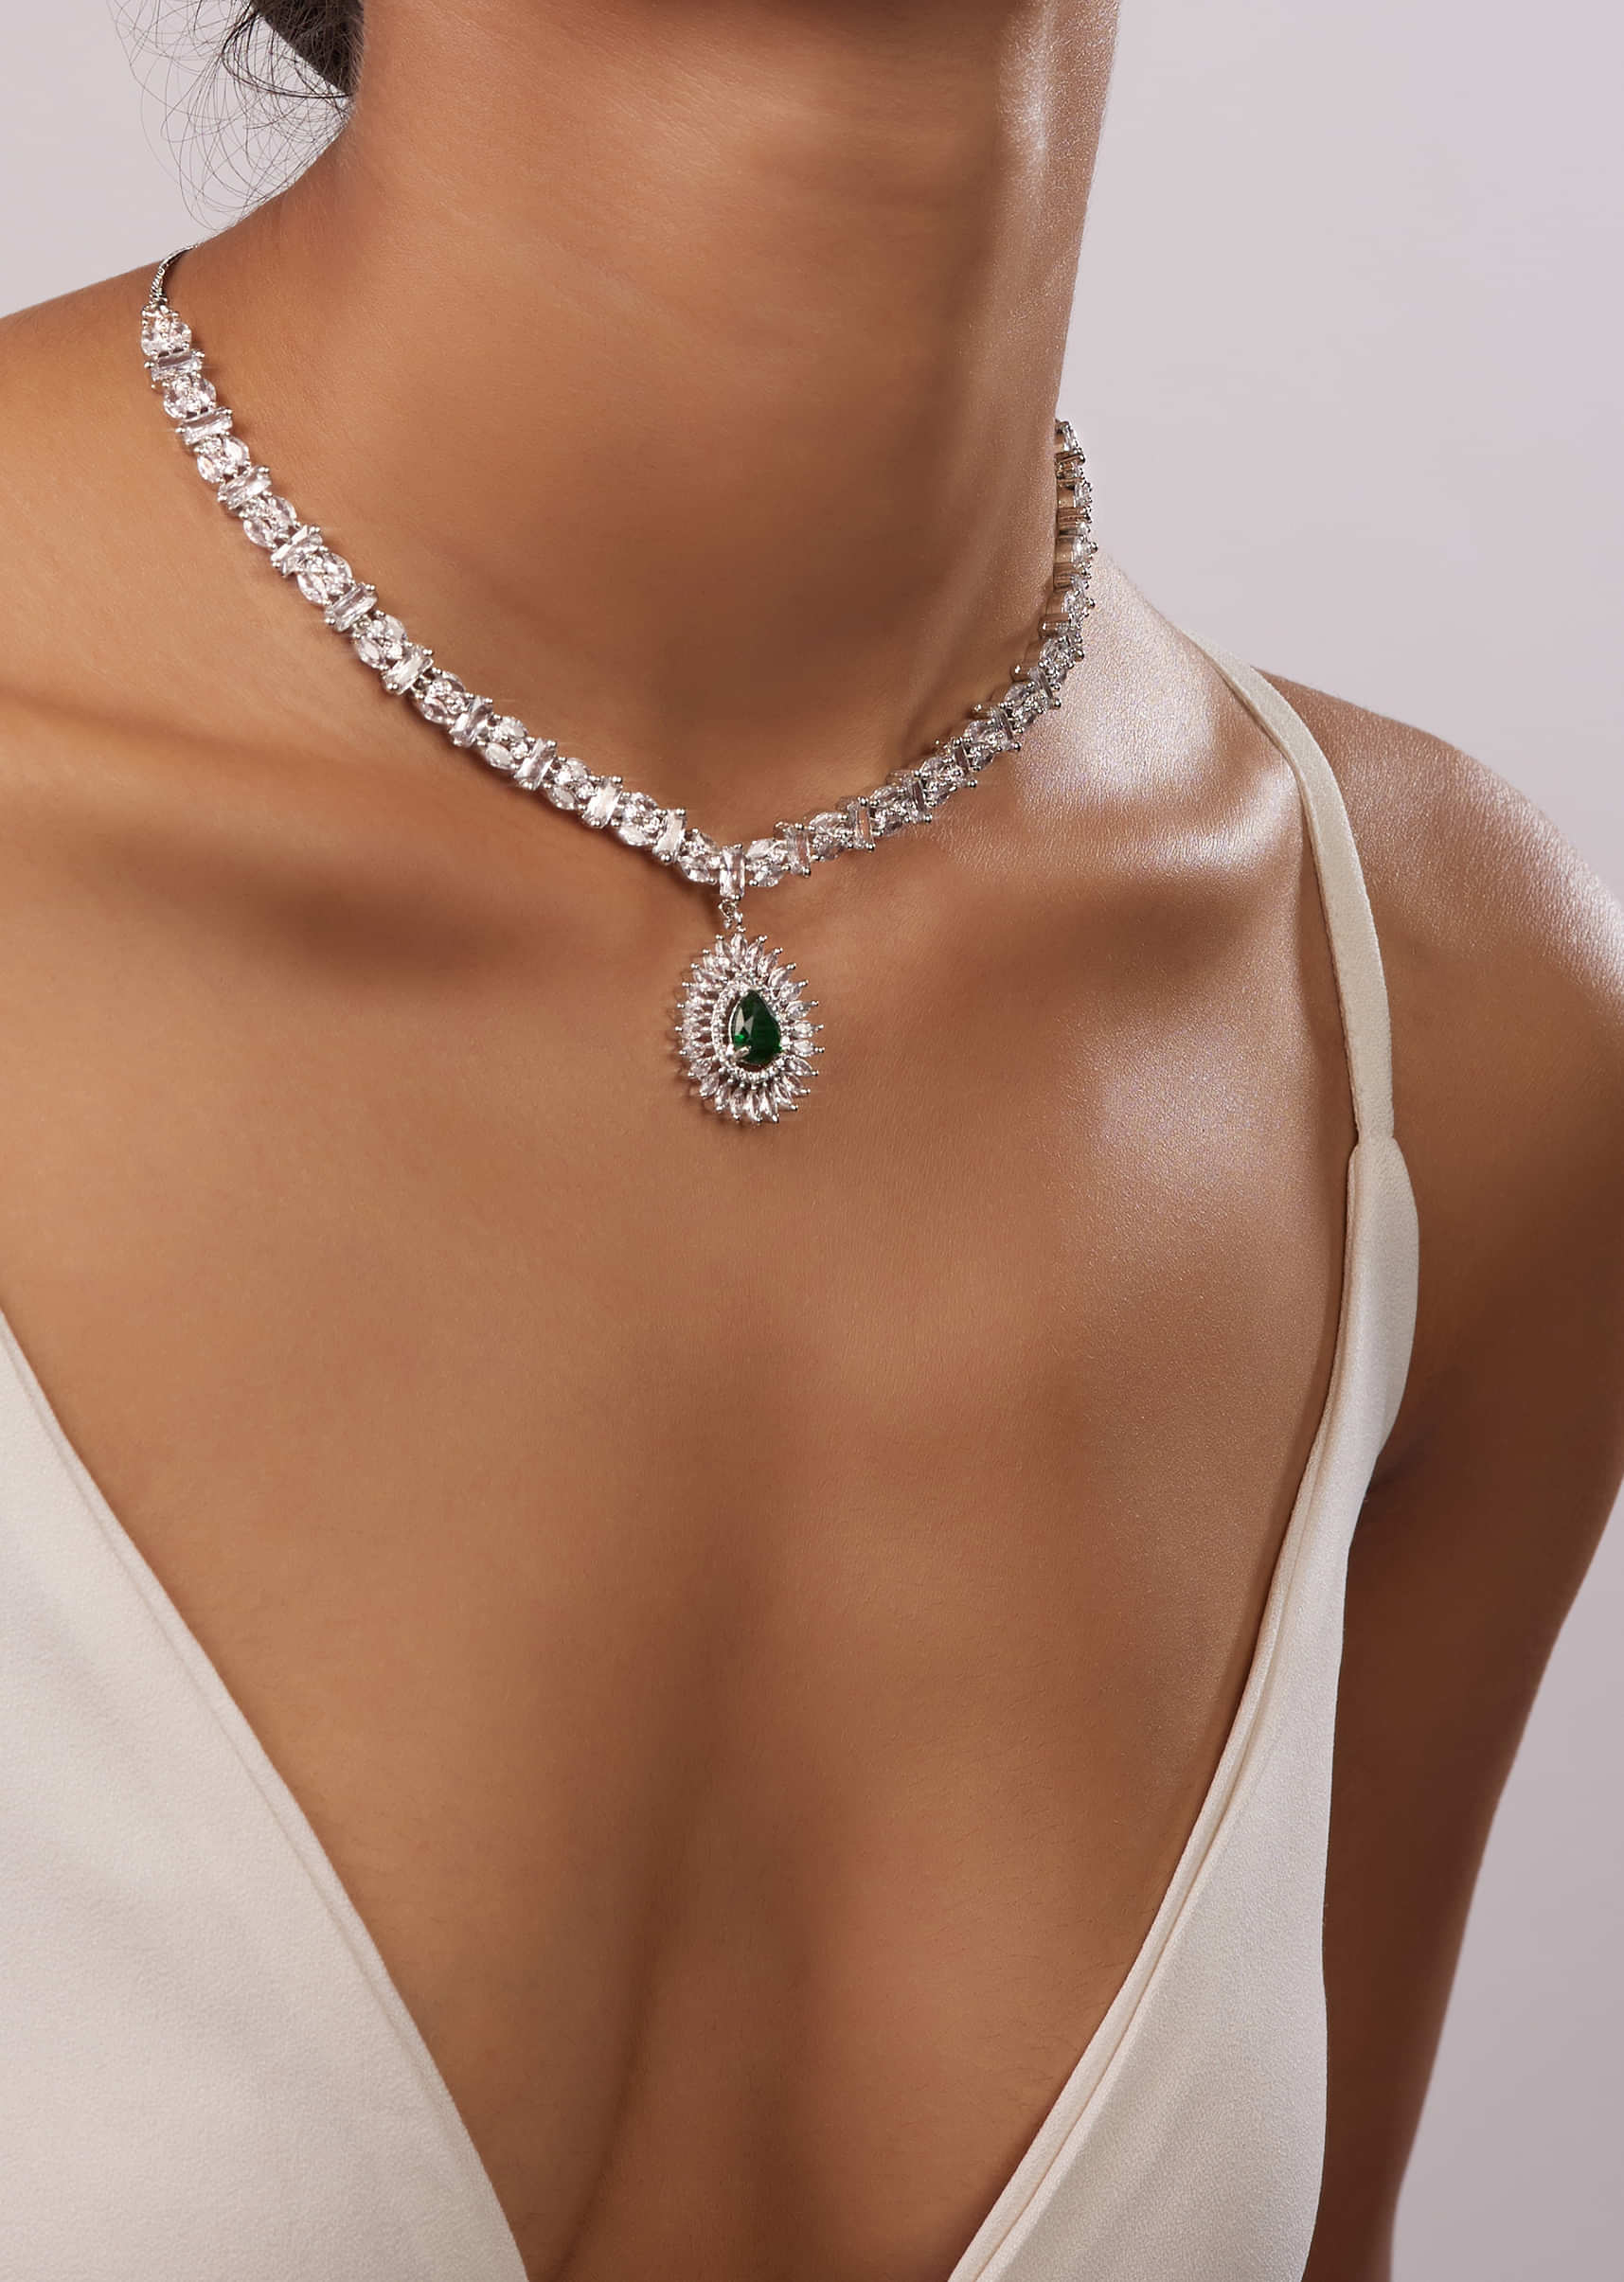 Diamond Necklace Set With Green Stones